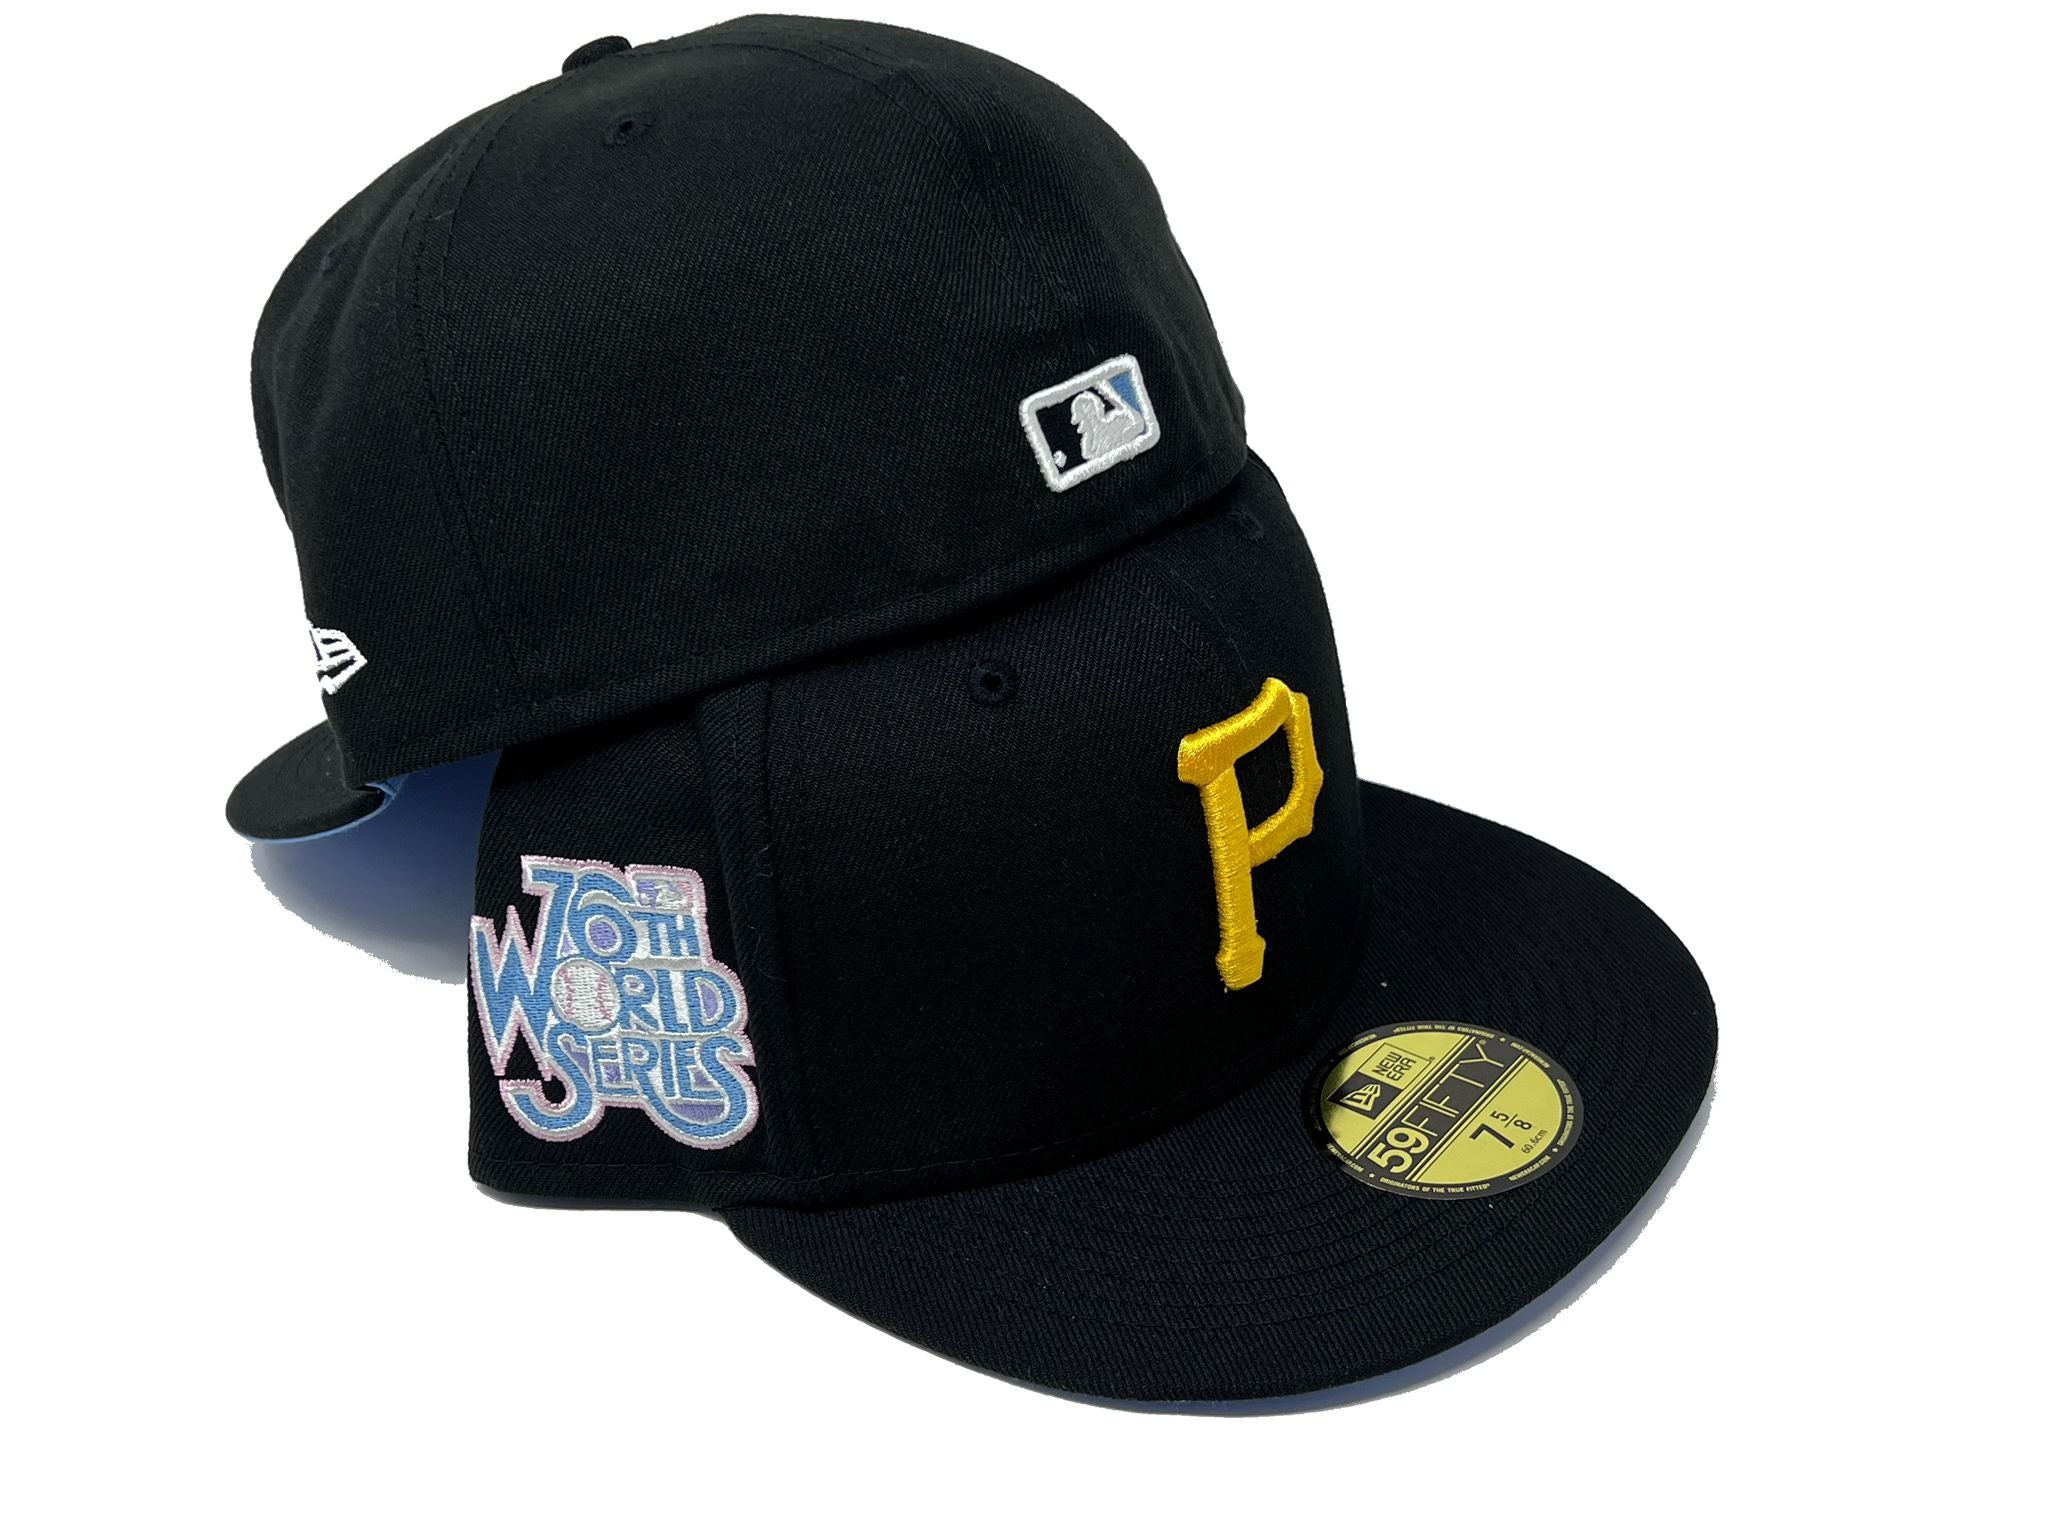 New Era Pittsburgh Pirates Men's Patch Pride T-Shirt 21 / M